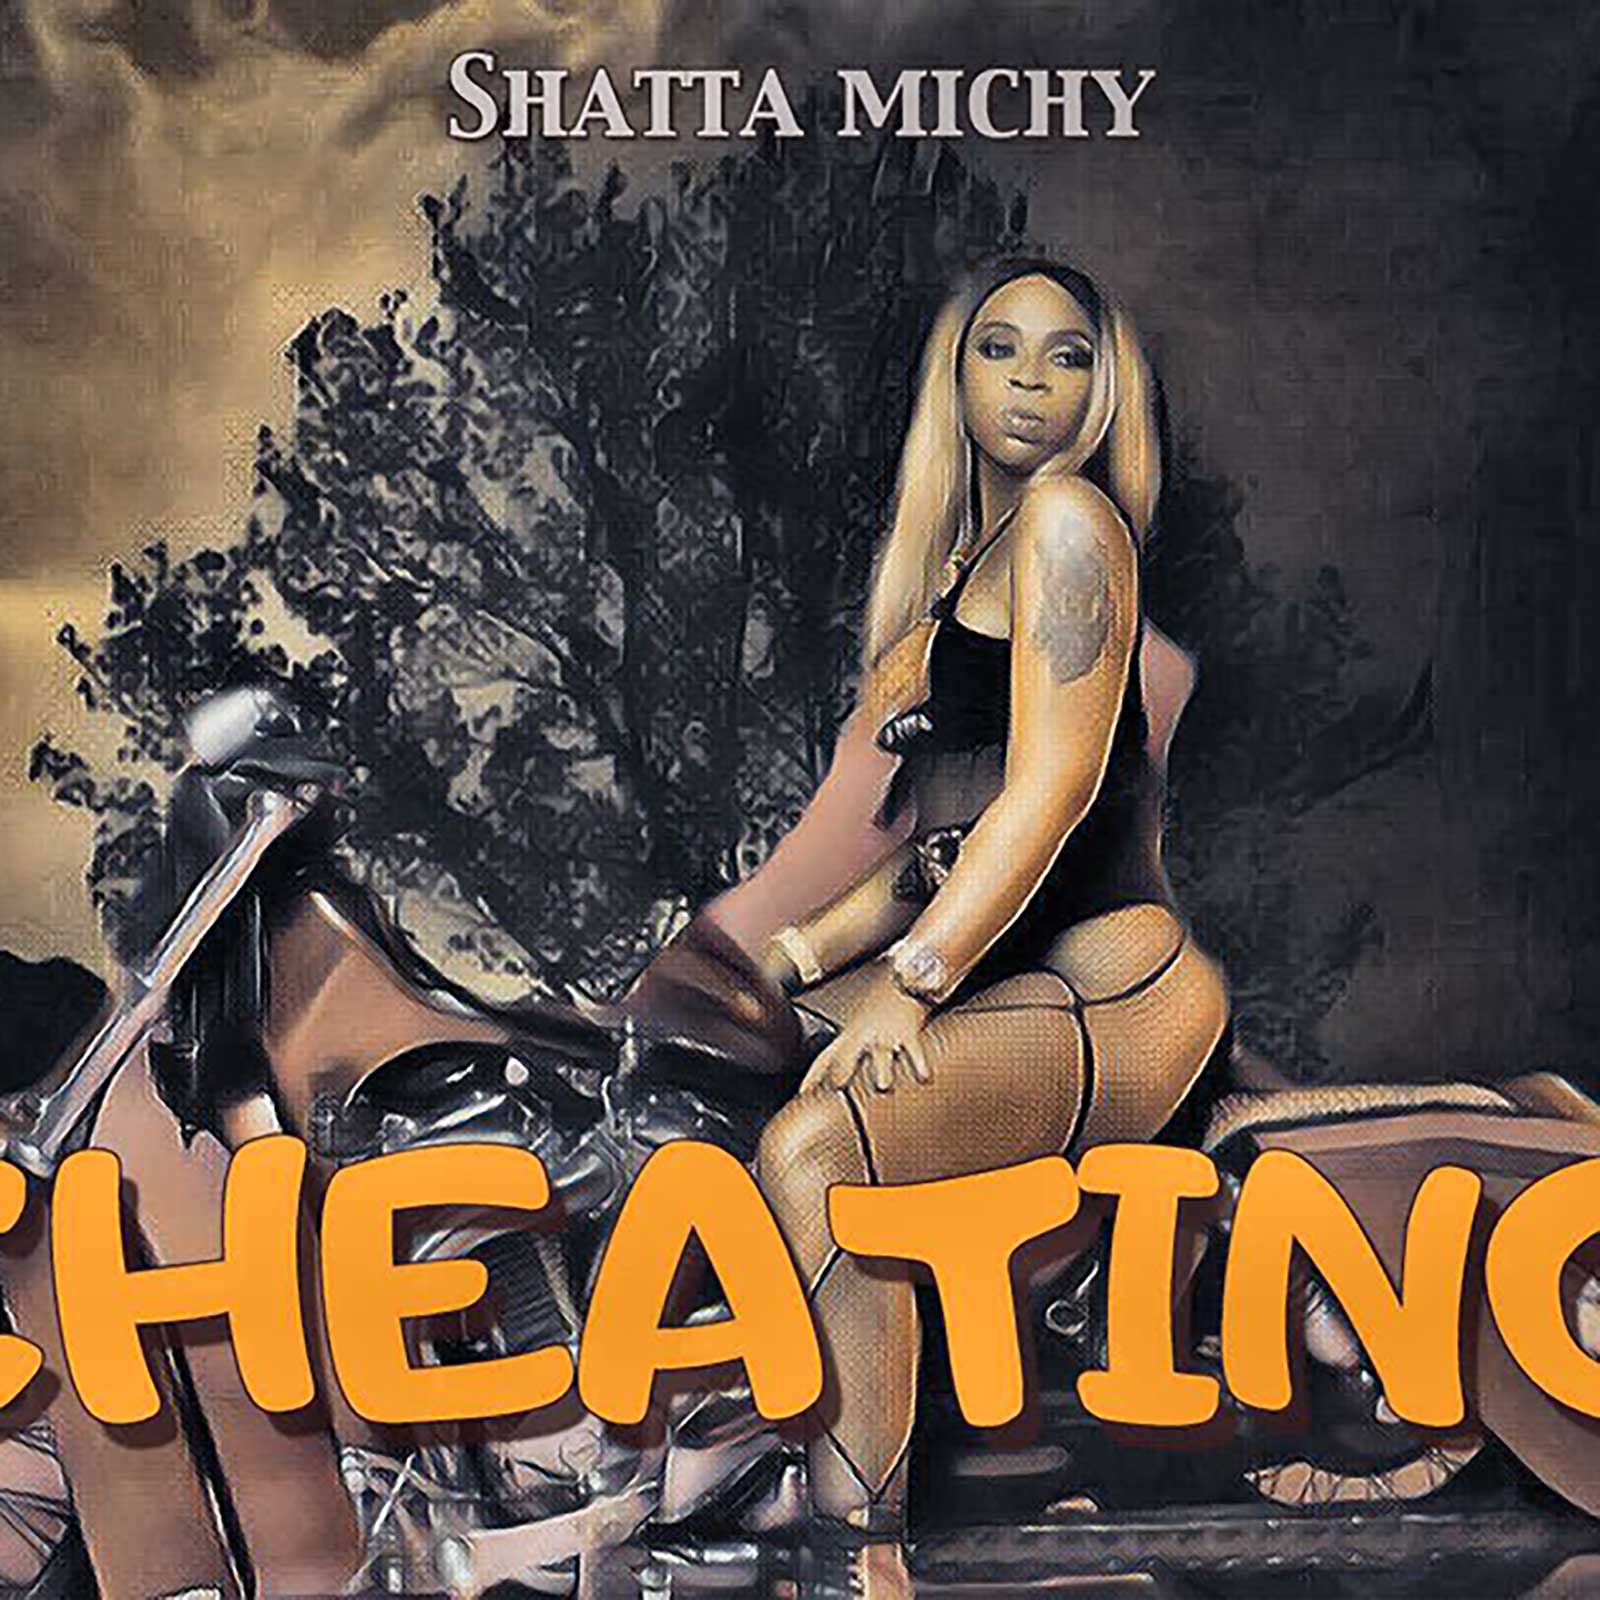 Cheating by Shatta Michy